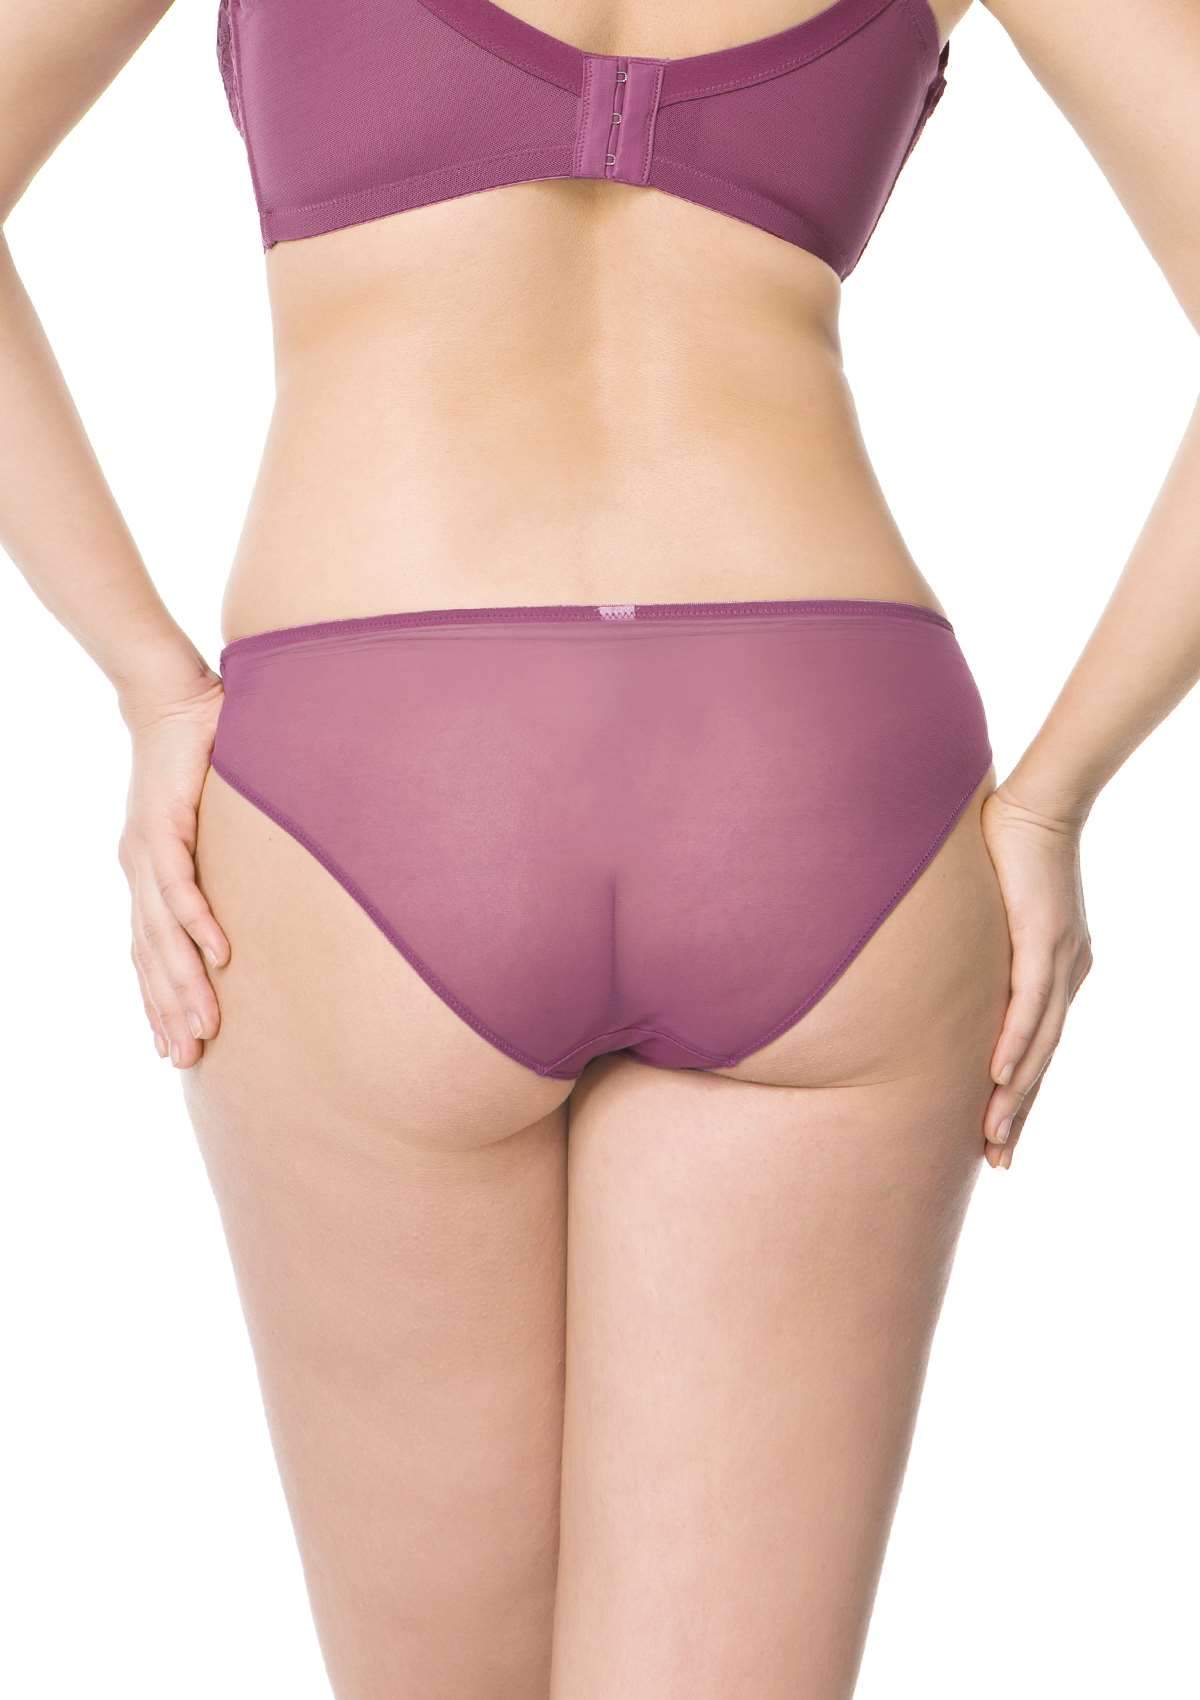 HSIA Peony Lace Mesh Everyday Bikini Underwear 3 Pack - XXL / Light Coral+Green+Purple